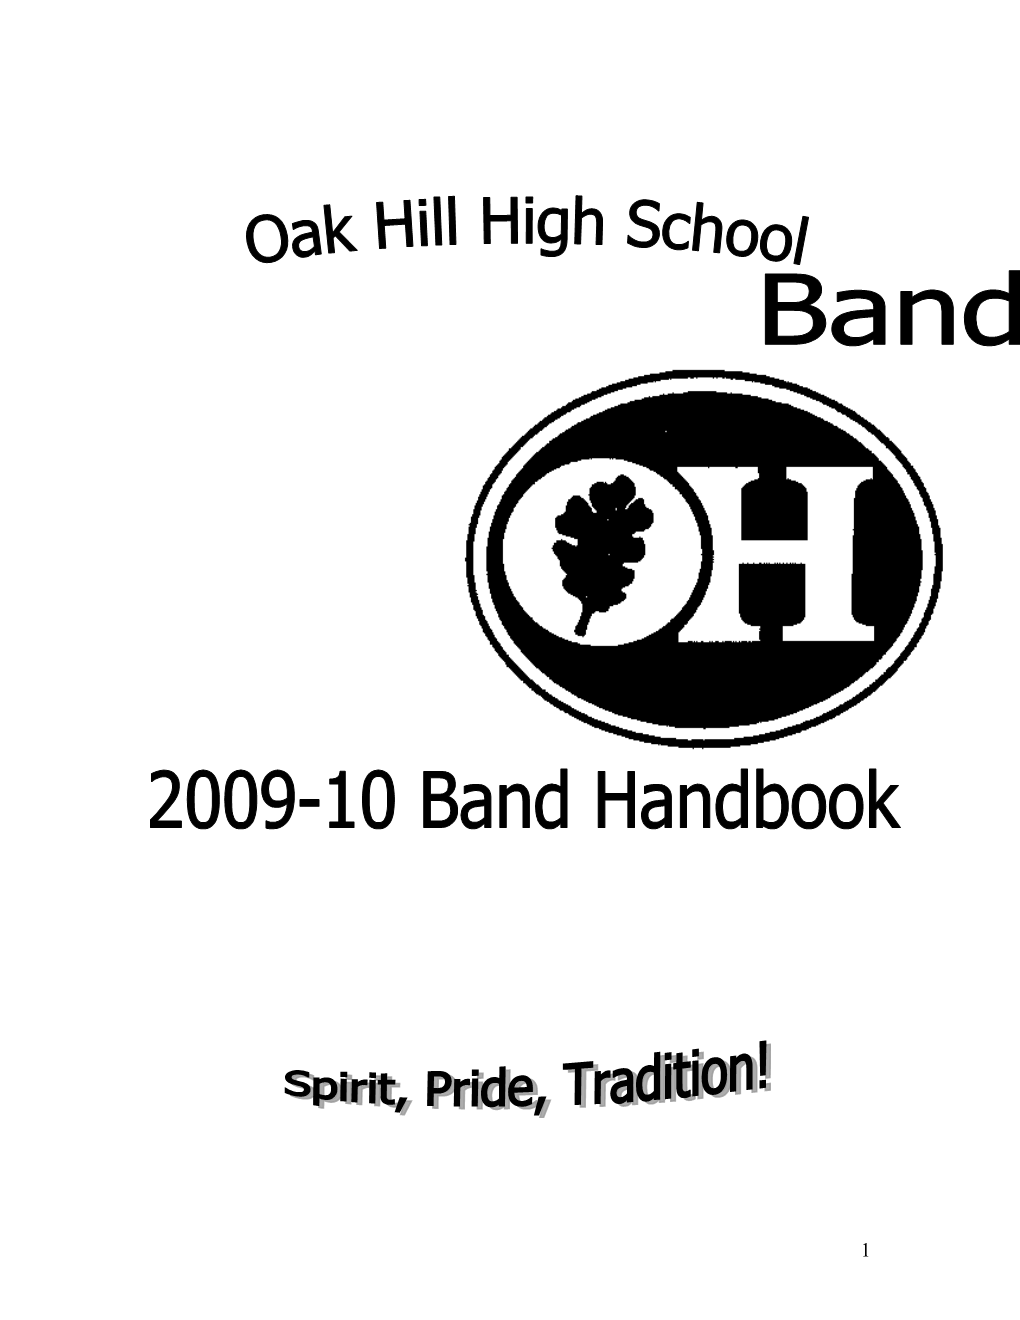 Oak Hill High School Band